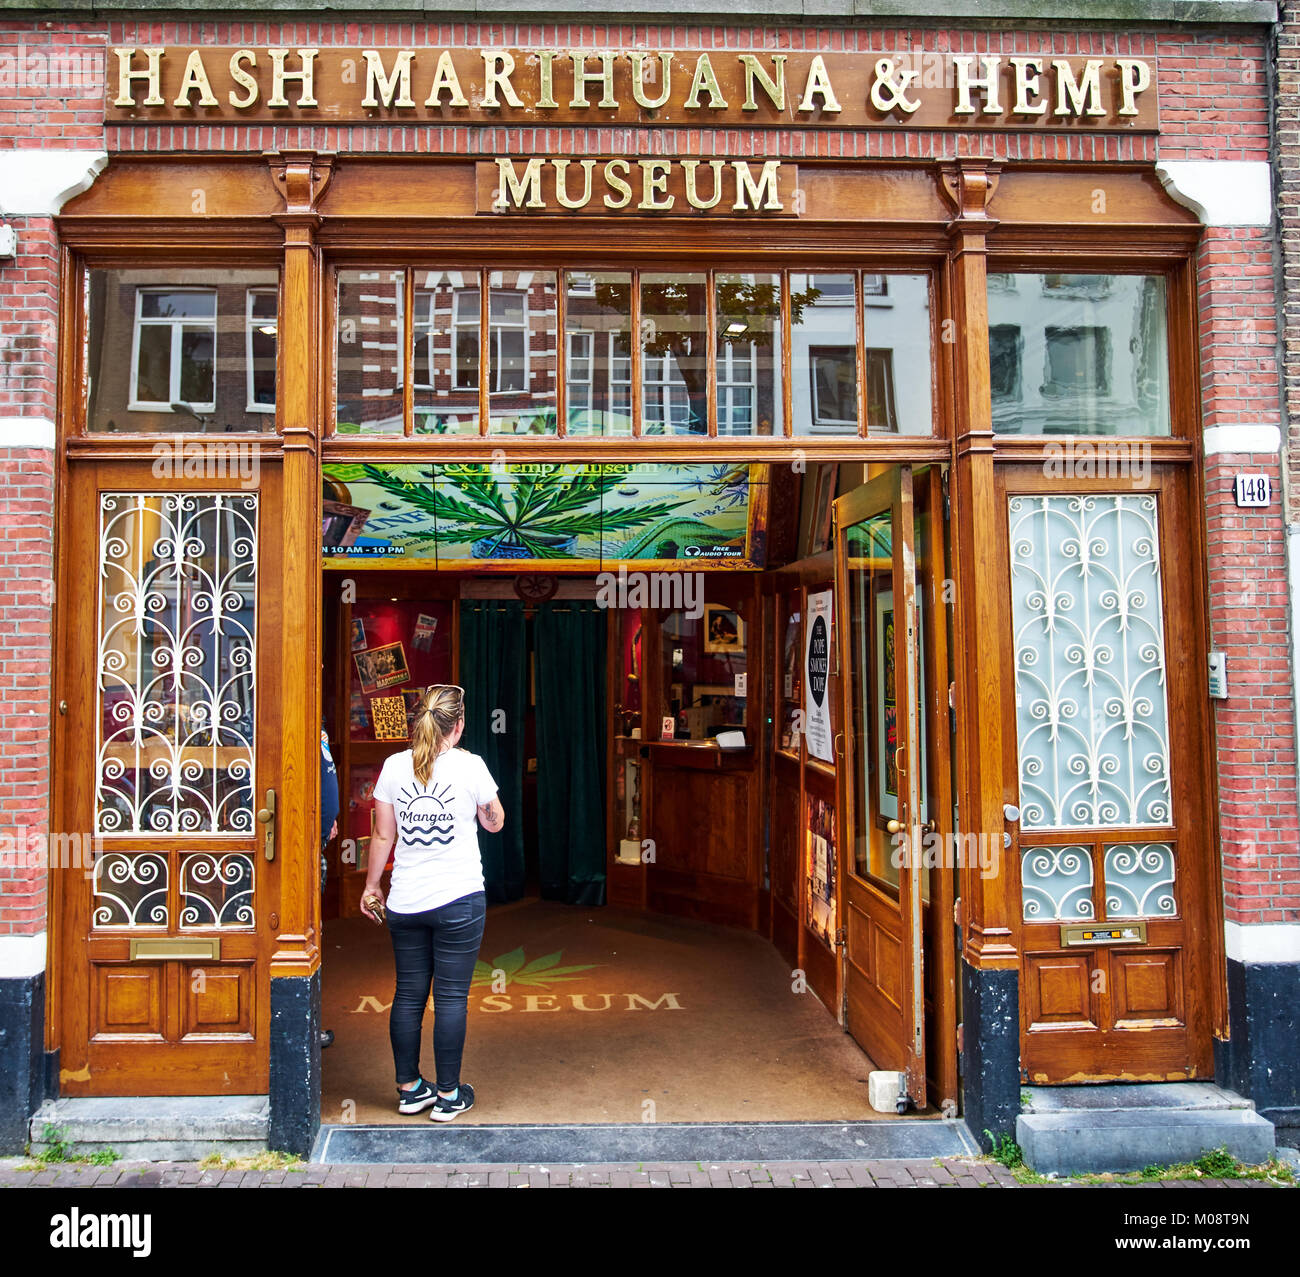 Dai Nippon Teikoku - Hash Marihuana & Hemp Museum